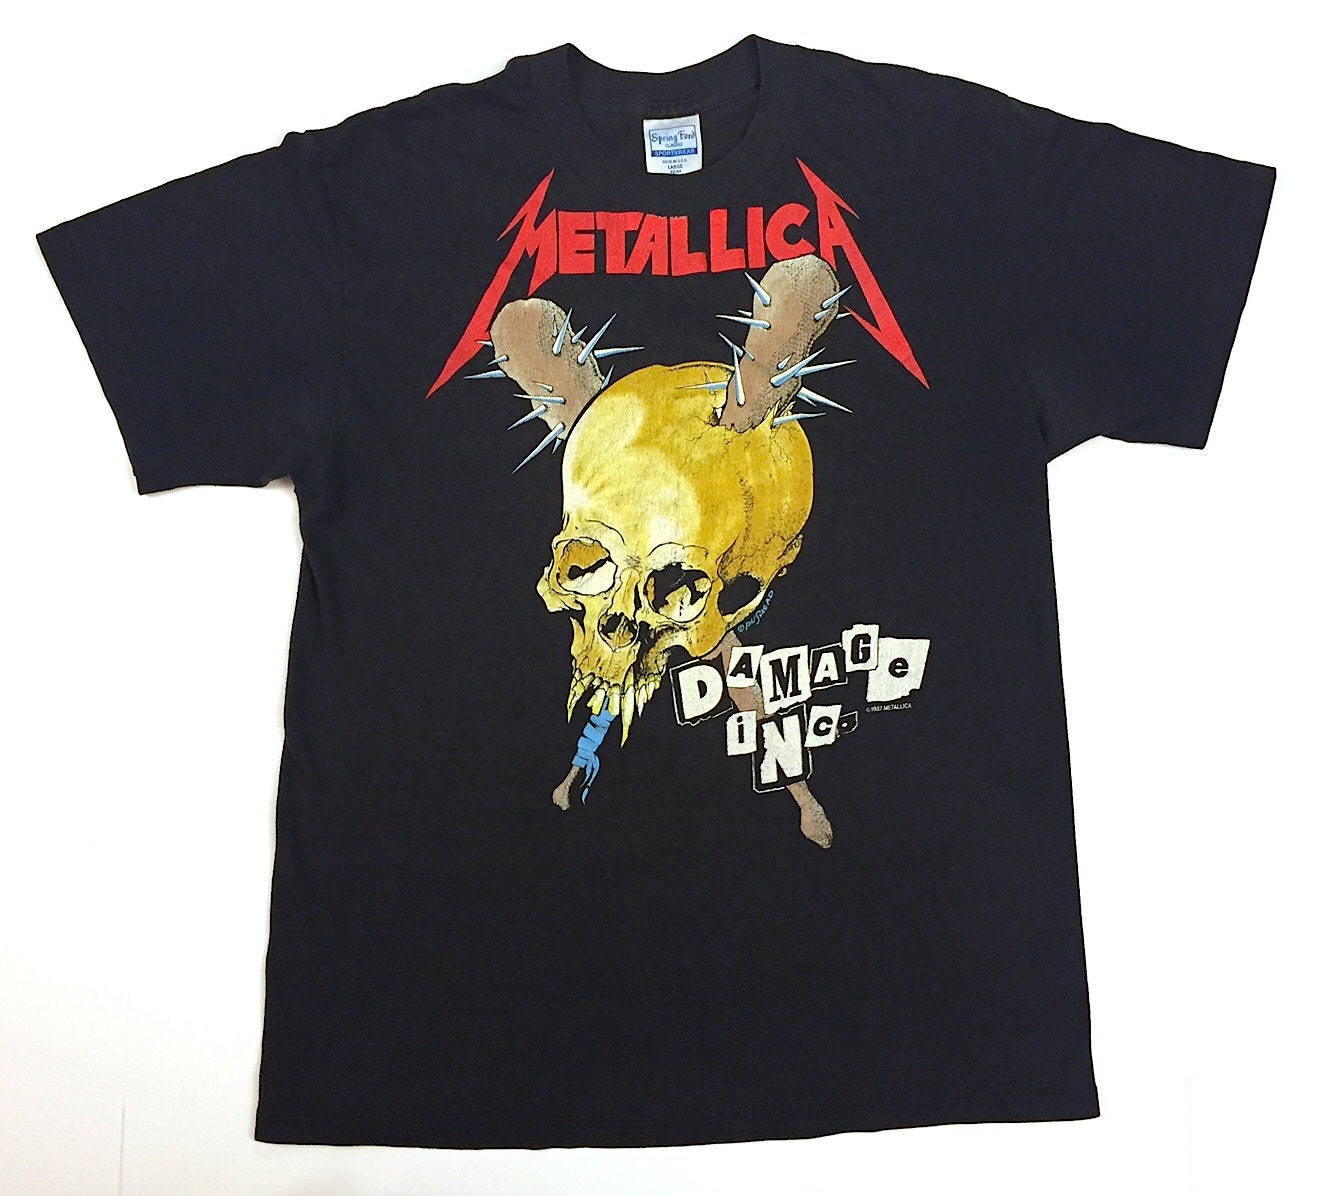 Vintage 80s METALLICA Damage Inc 1987 concert shirt